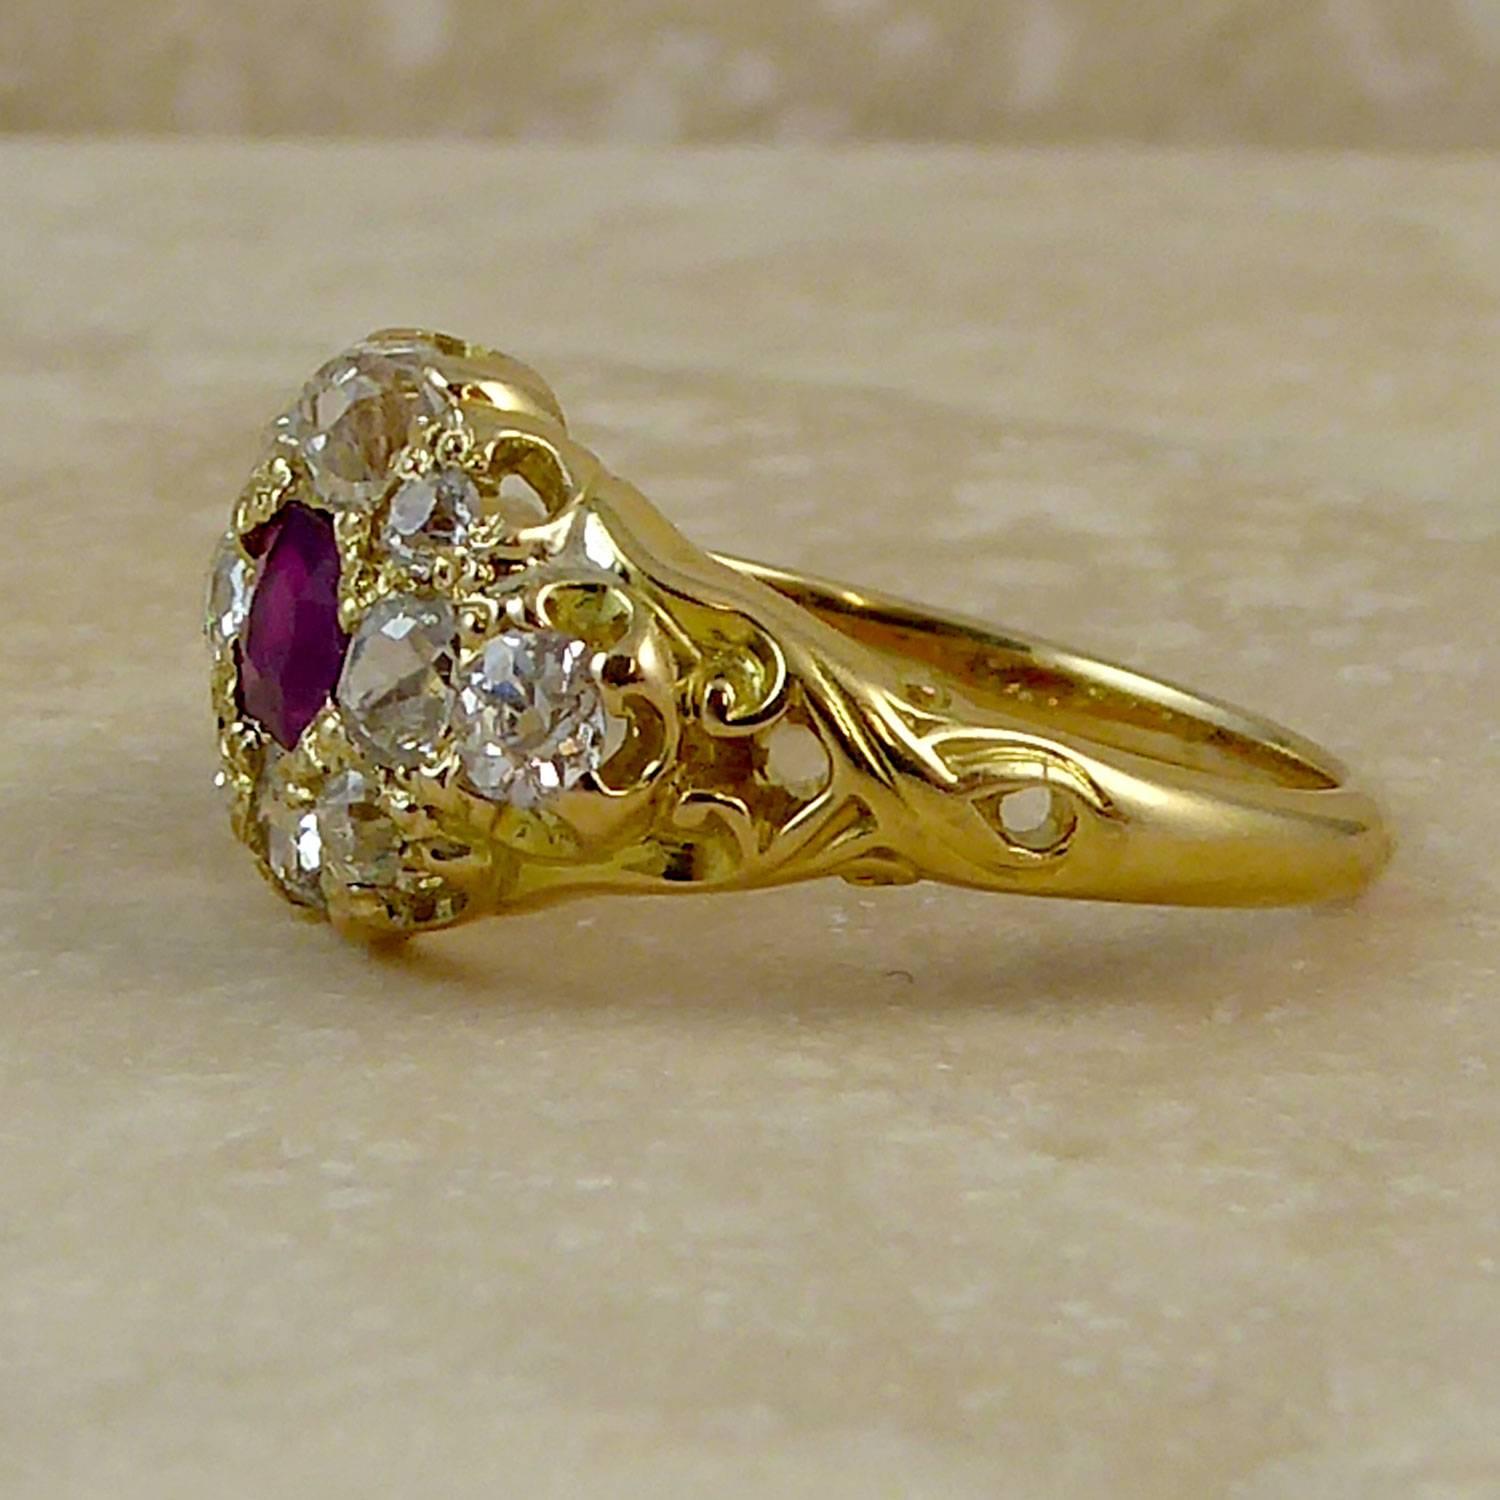 Cushion Cut Edwardian Ruby Diamond Cluster Ring, Yellow Gold, circa 1900-1910